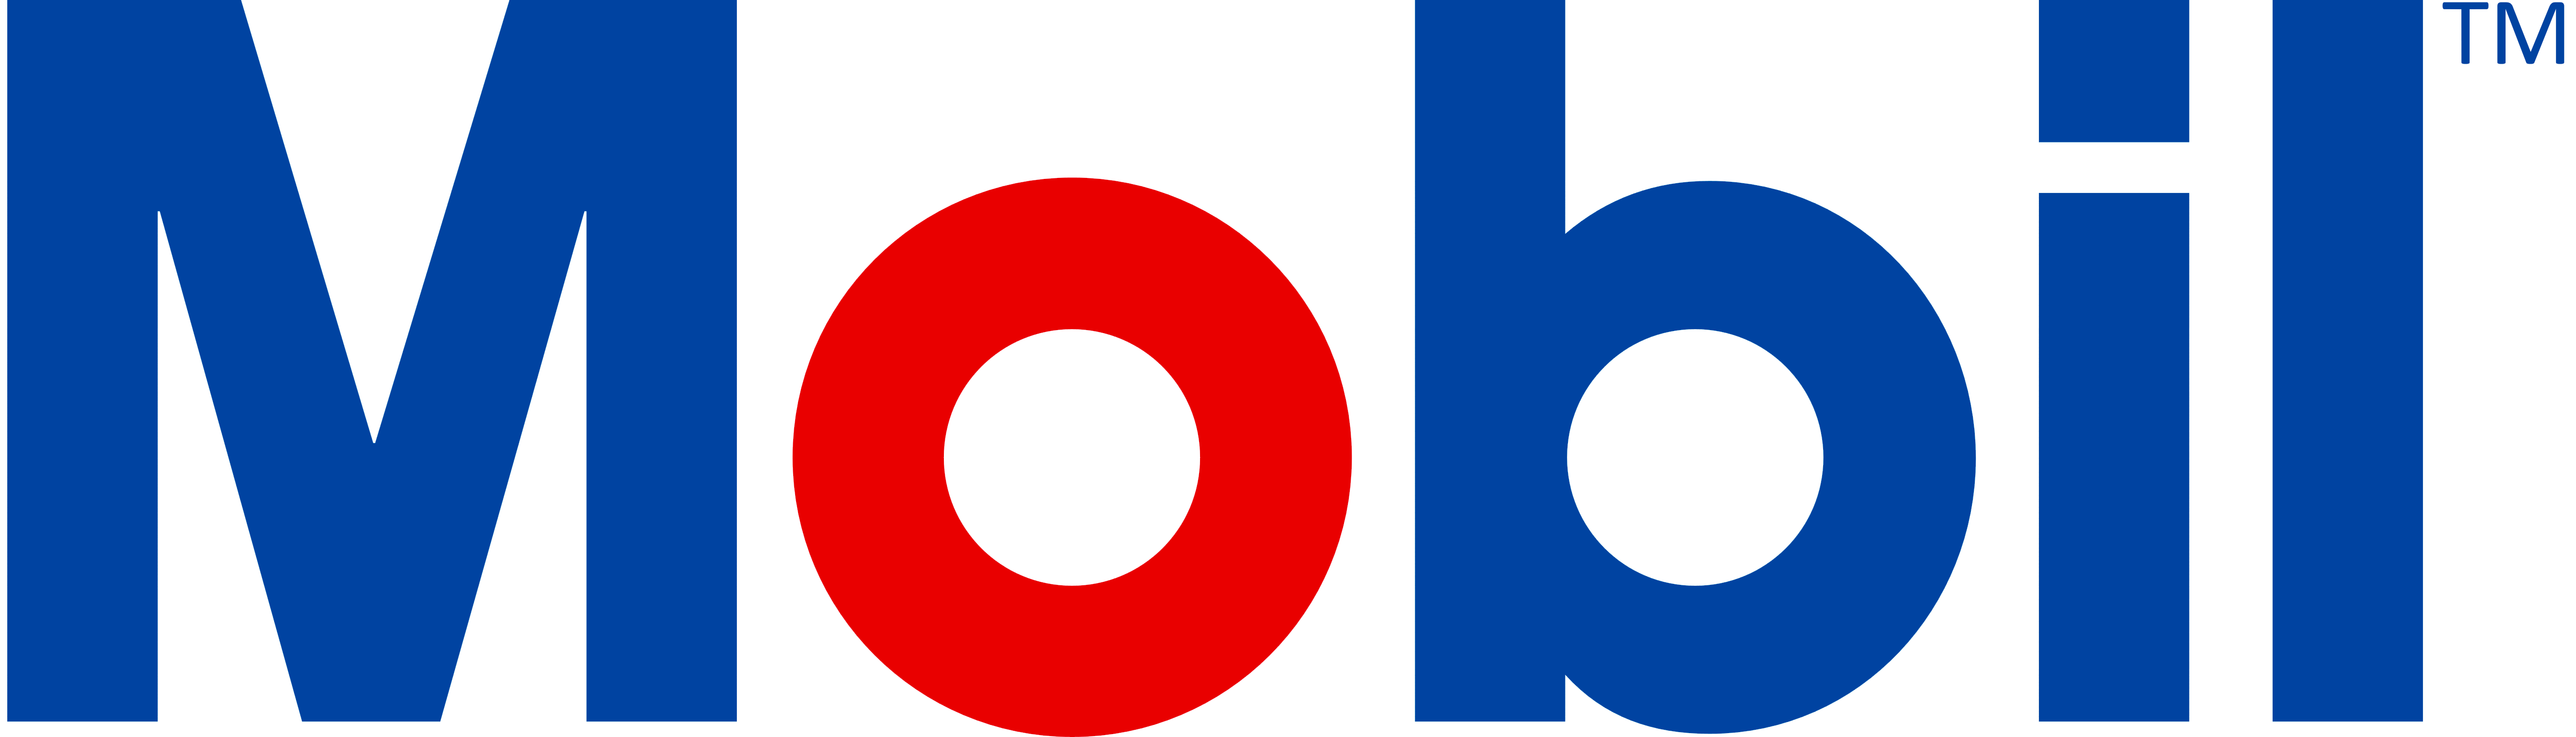 Red Oil Company Logo - Mobil oil company Logos